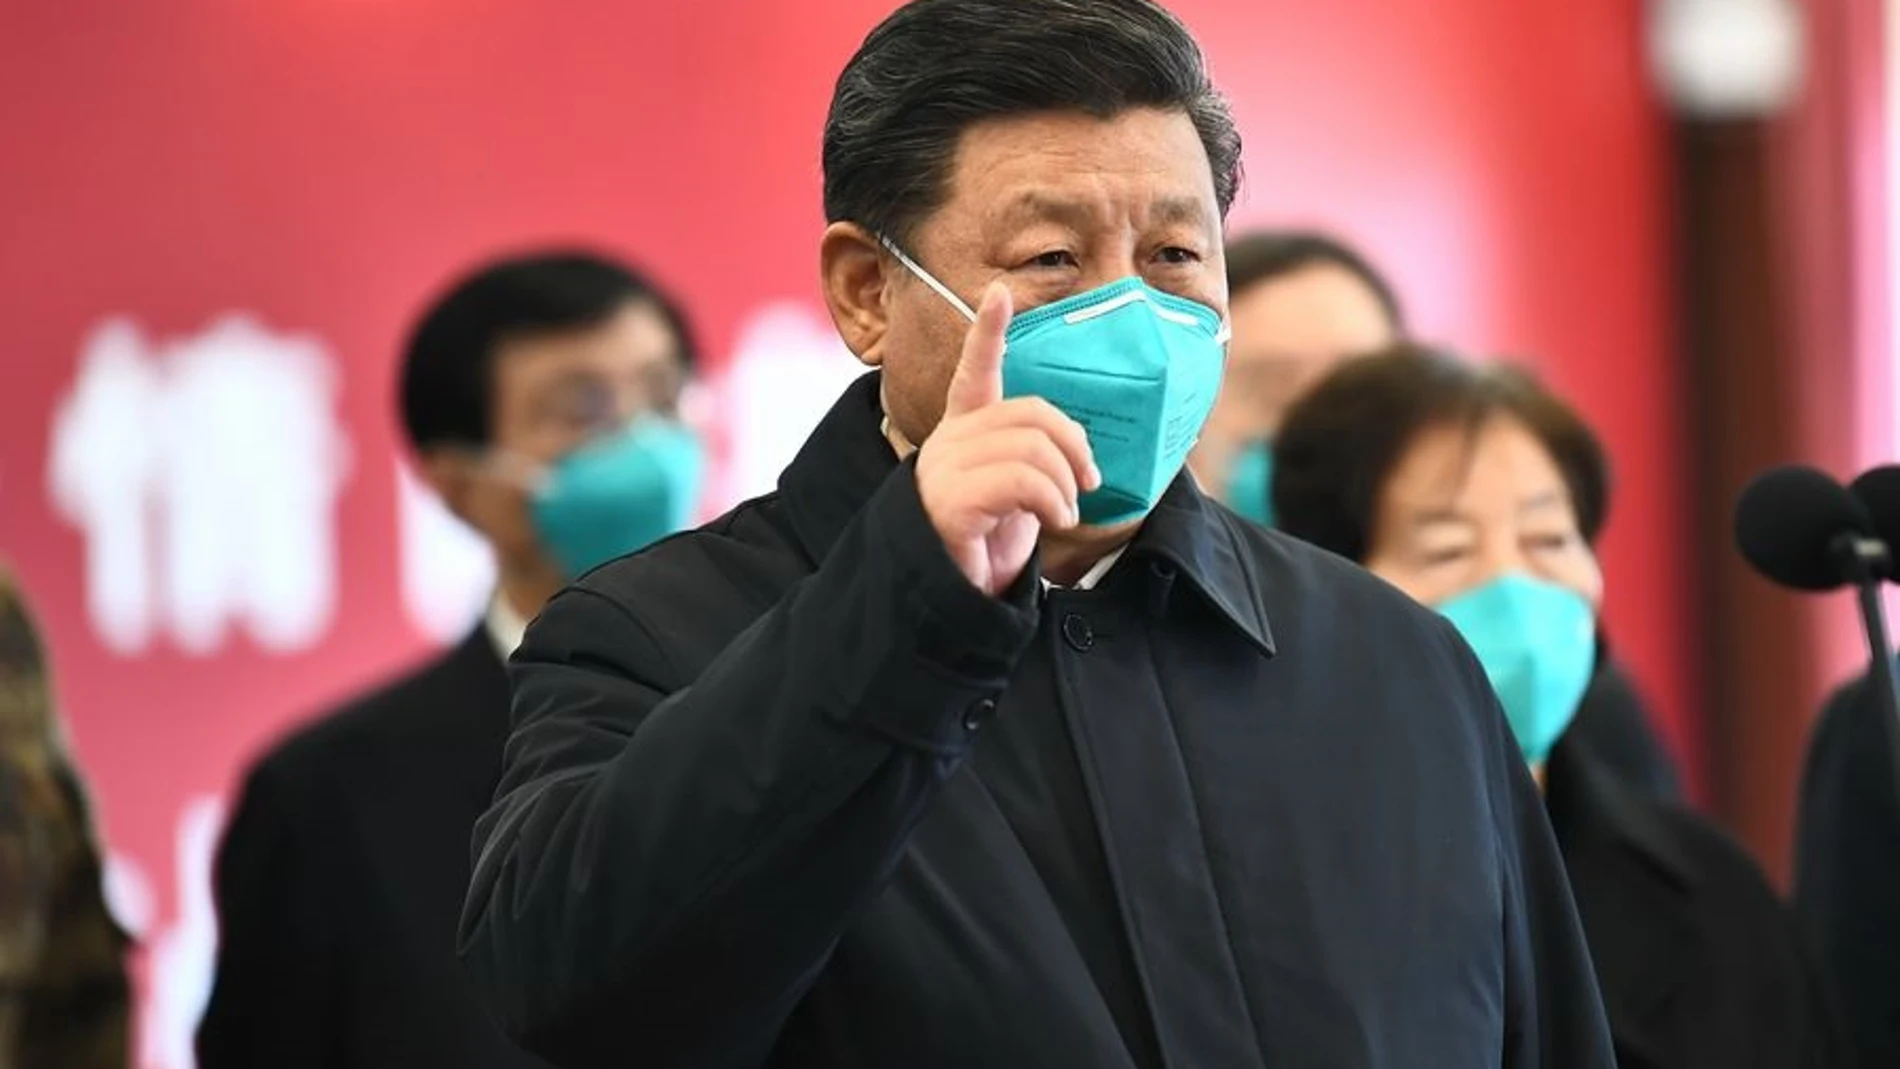 Coronavirus.- Xi promete luchar hasta la "victoria" contra el coronavirus durante su visita a Wuhan, epicentro del brote